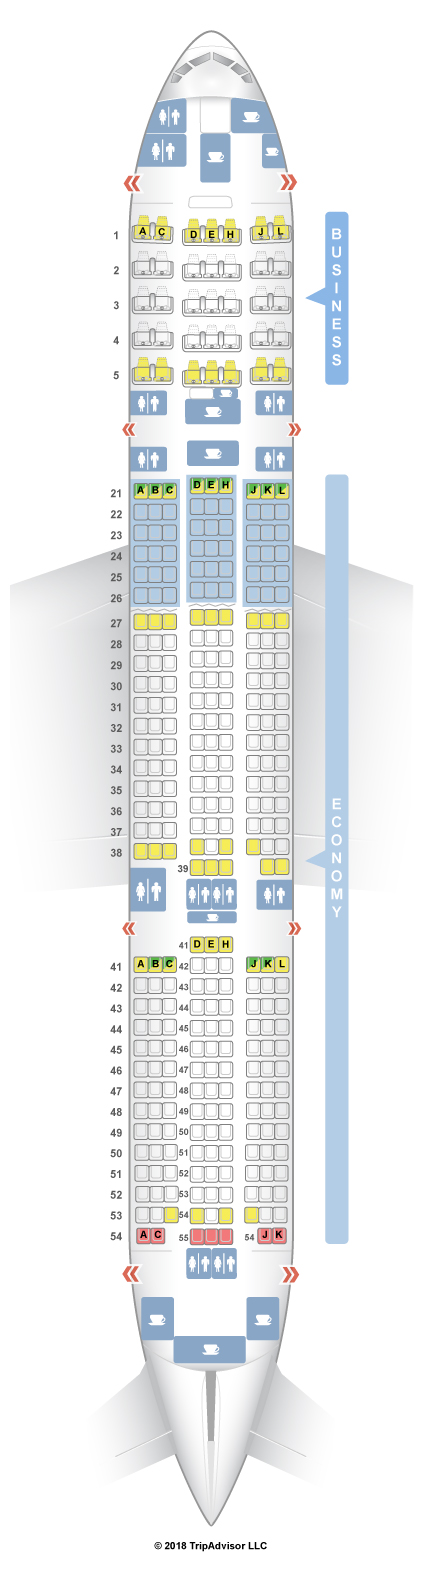 777 Plane Seating Chart